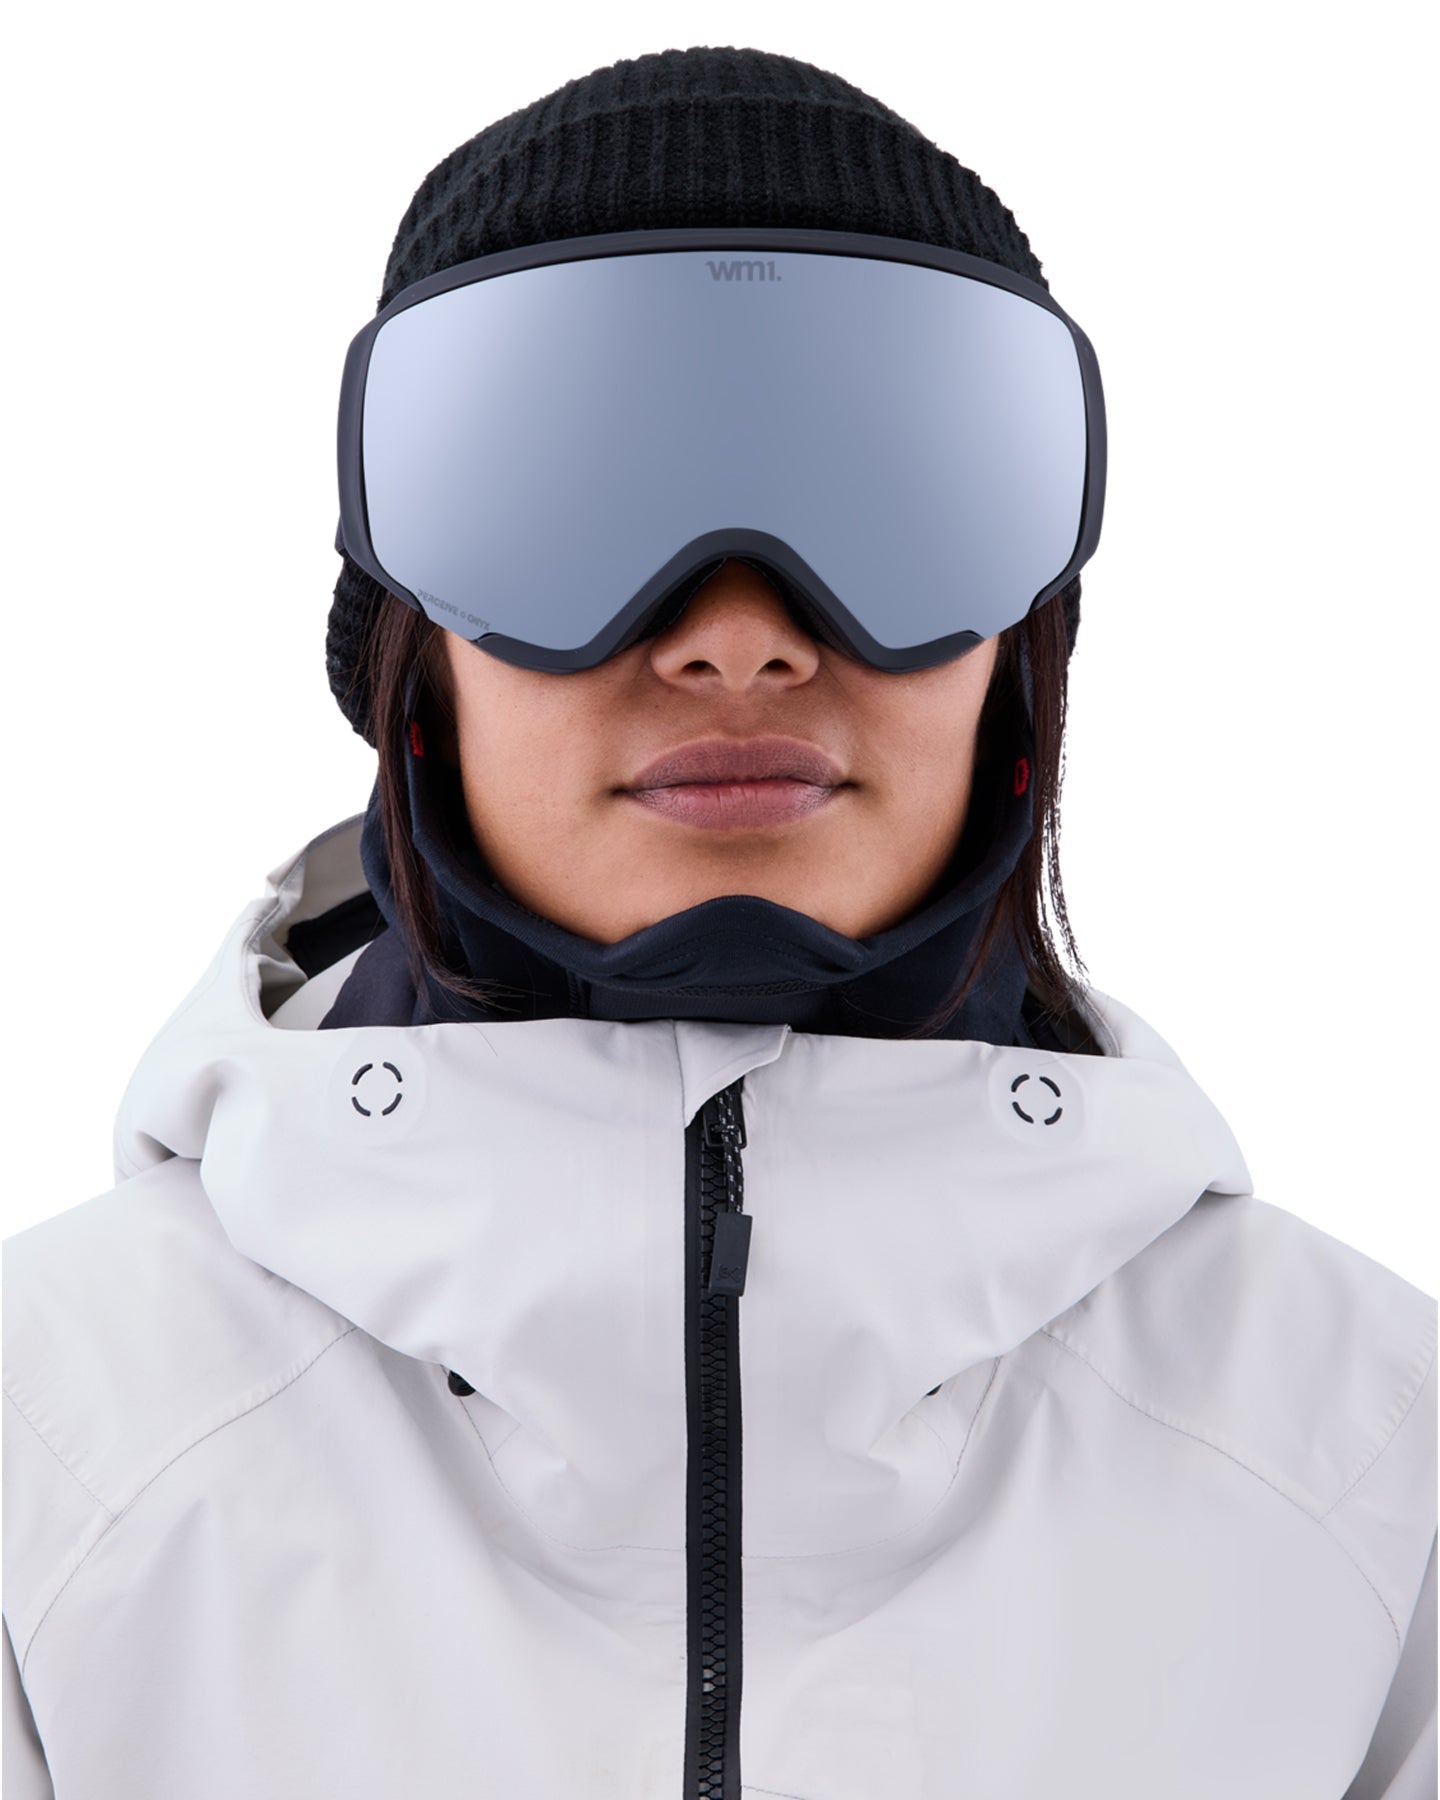 Anon WM1 Low Bridge Fit Snow Goggles + Bonus Lens + MFI - Smoke / Perceive Sunny Onyx Women's Snow Goggles - SnowSkiersWarehouse